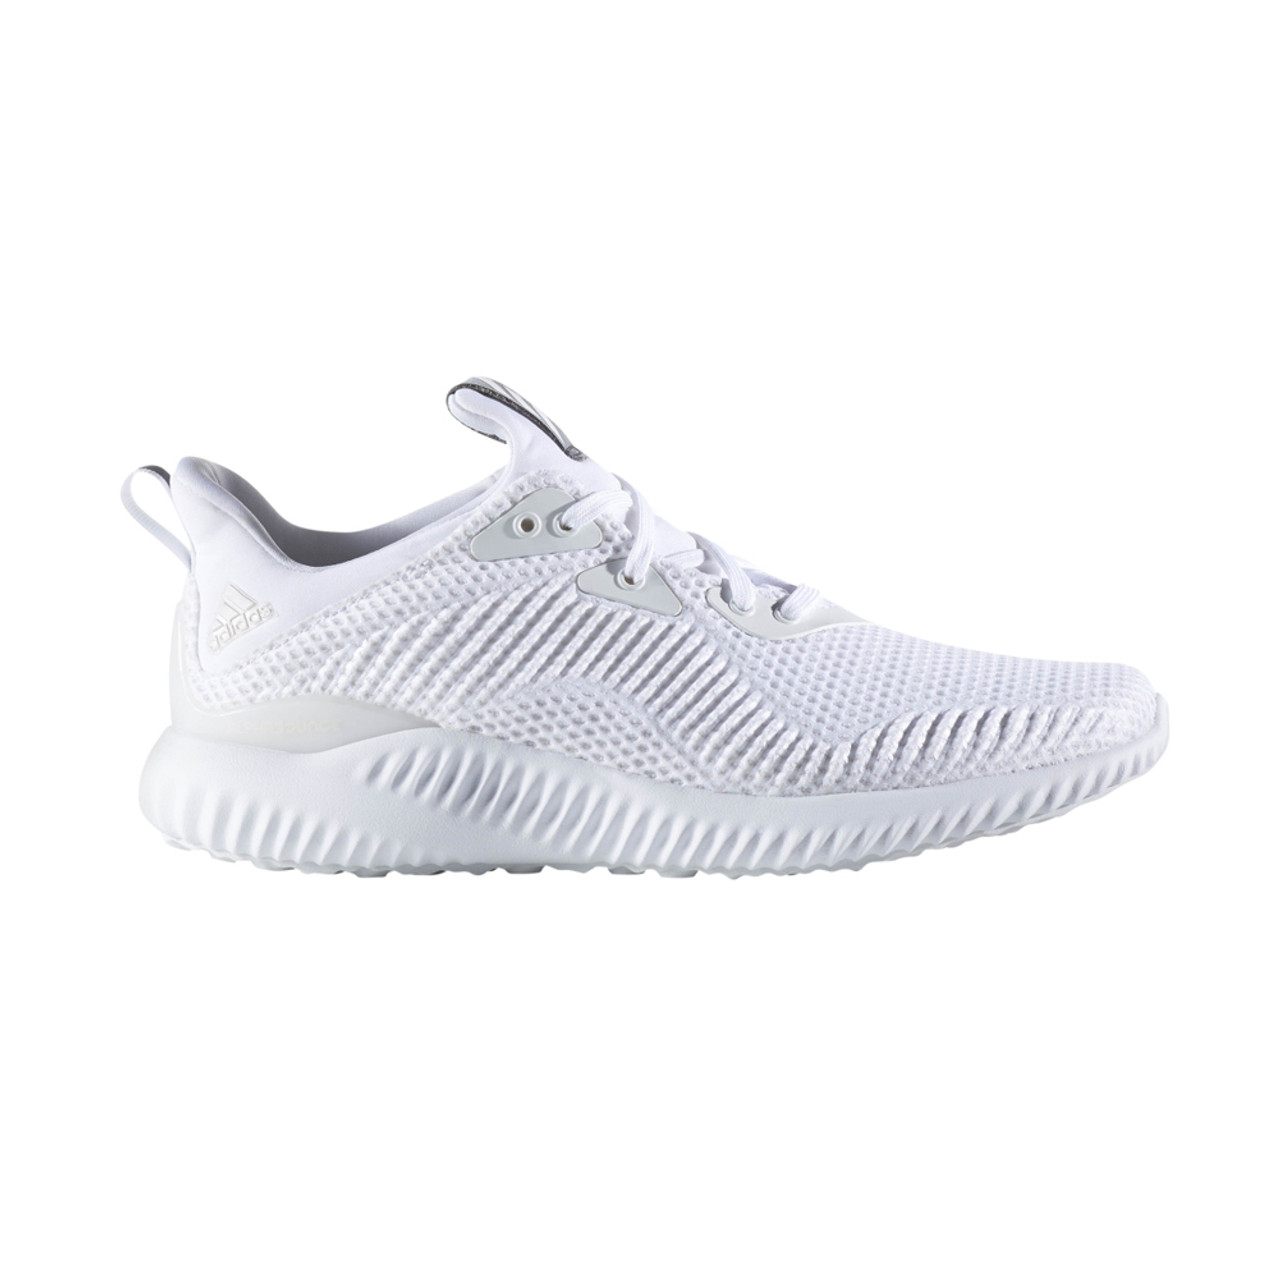 Adidas Women’s Alphabounce Running Shoes